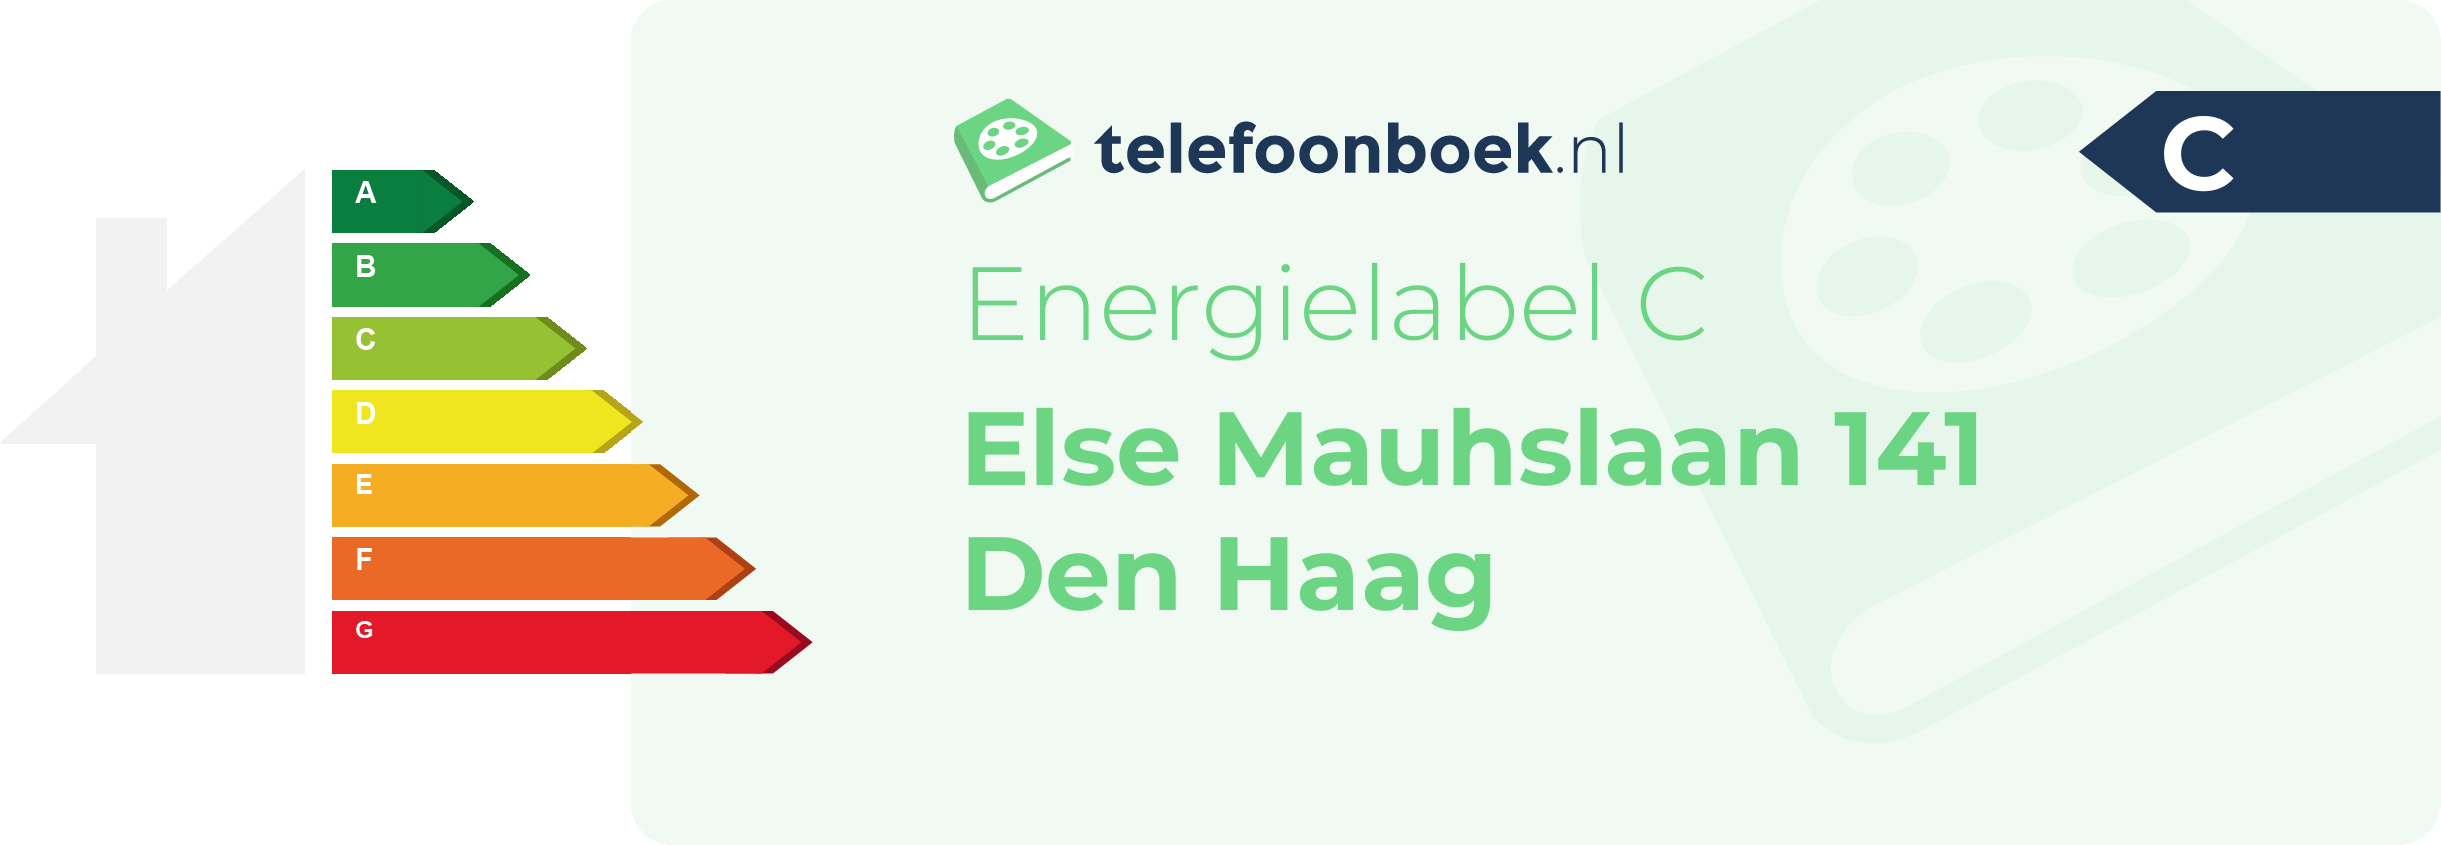 Energielabel Else Mauhslaan 141 Den Haag